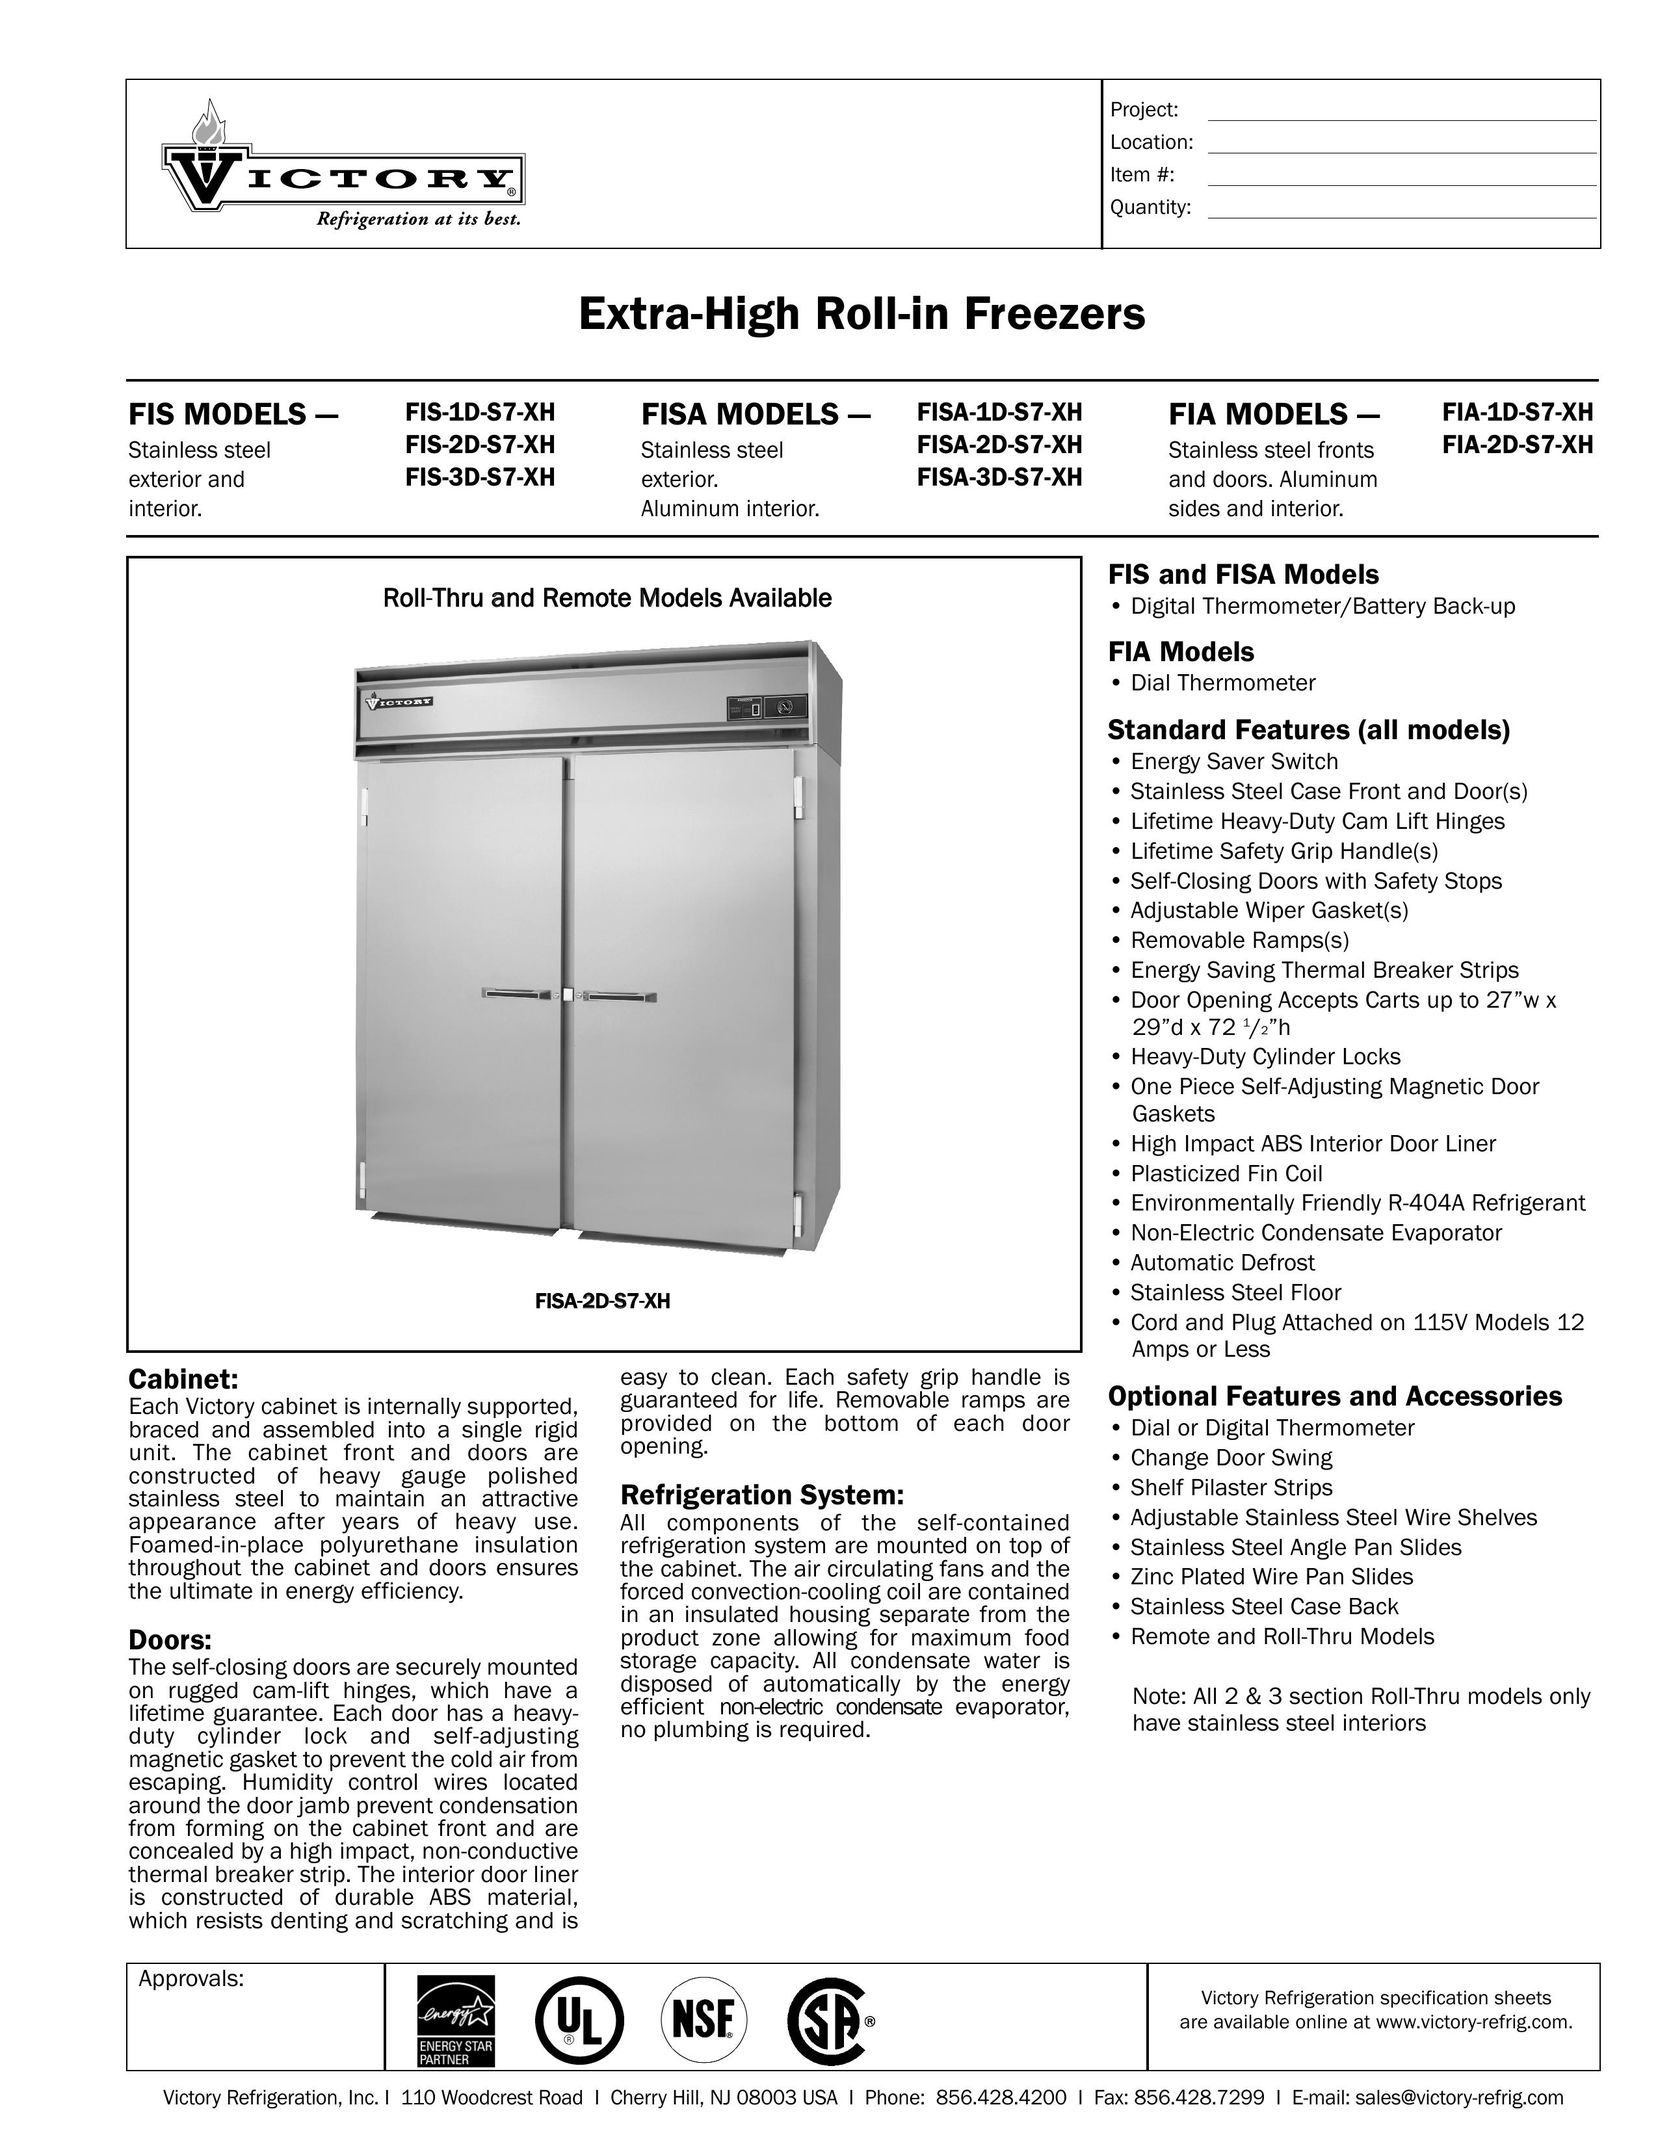 Victory Refrigeration FISA-3D-S7-XH Freezer User Manual